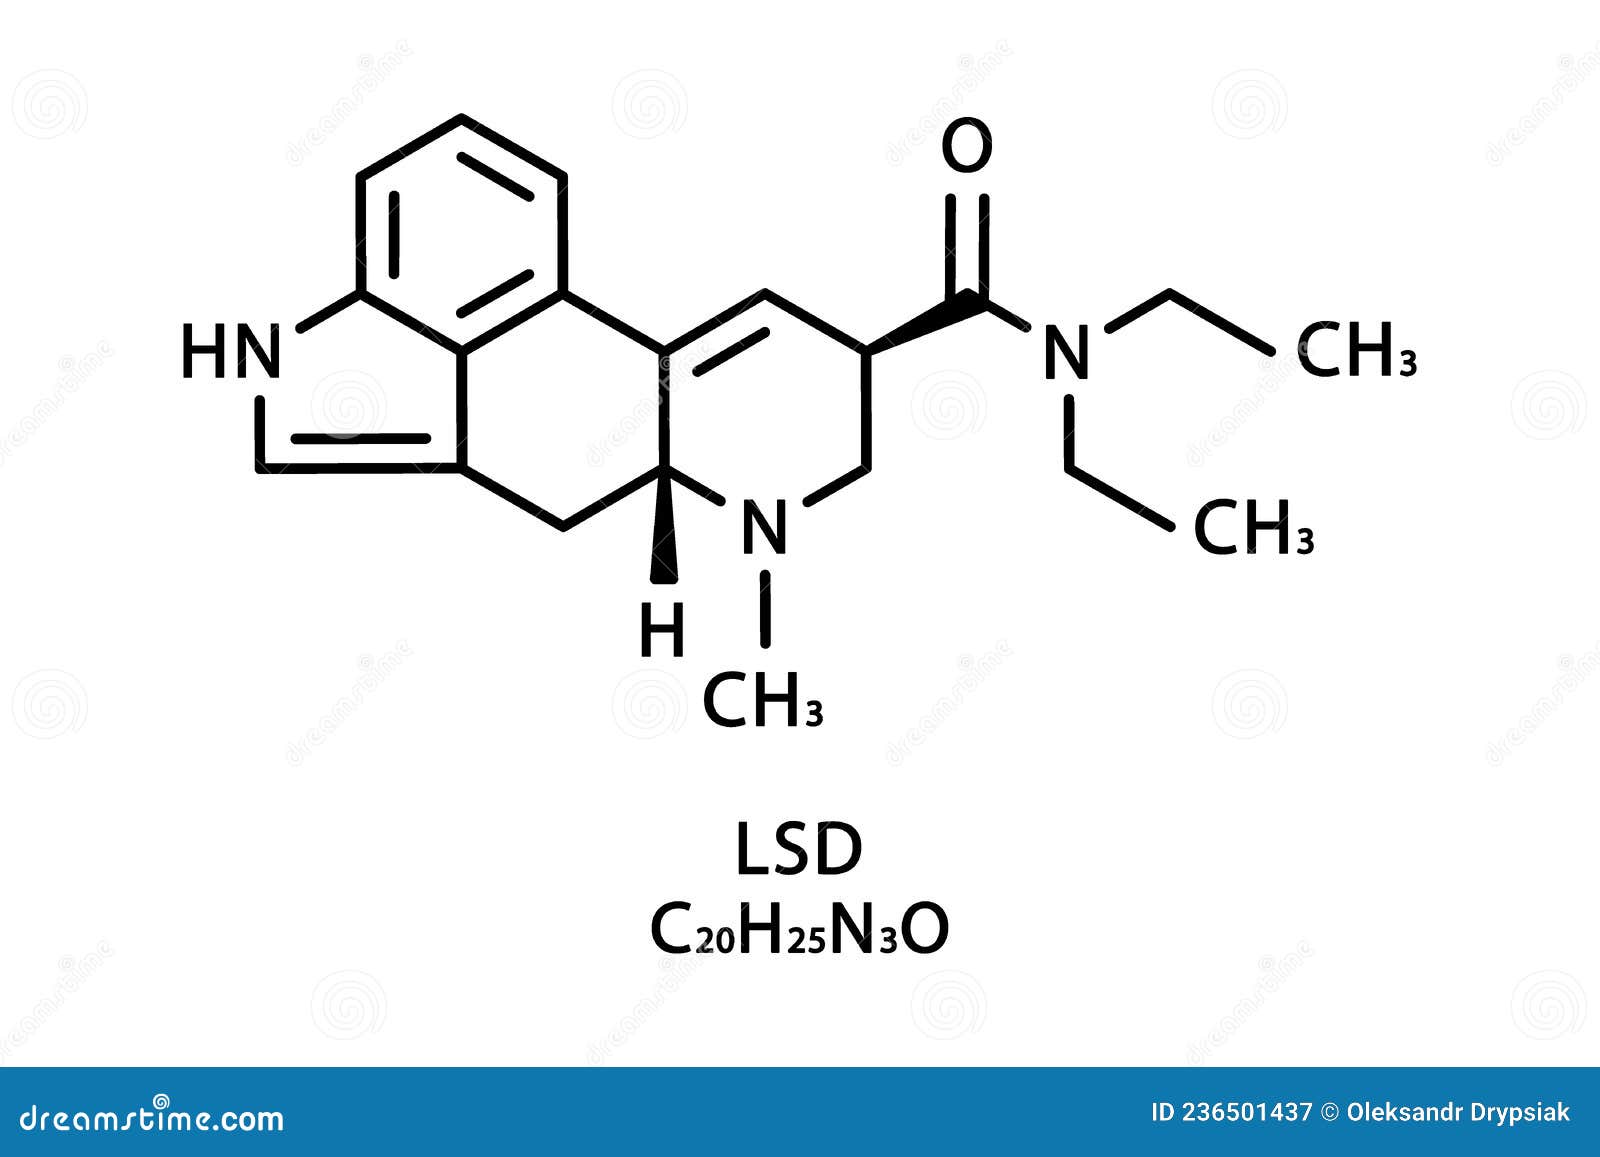 lsd molecular structure. lysergic acid diethylamide skeletal chemical formula. chemical molecular formula 